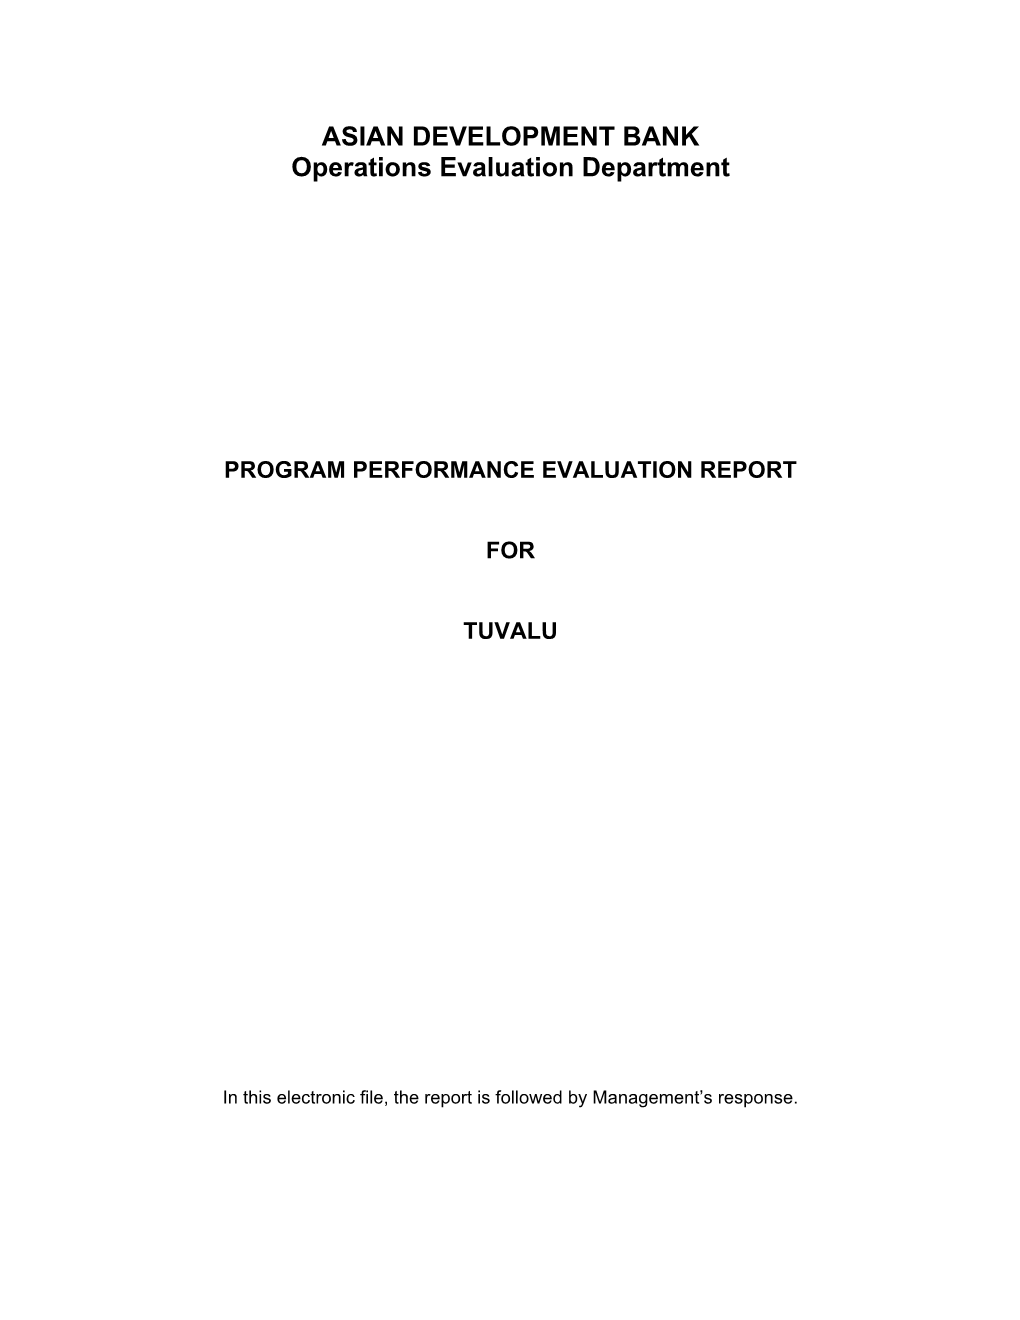 Evaluation of the Tuvalu Islands Development Program